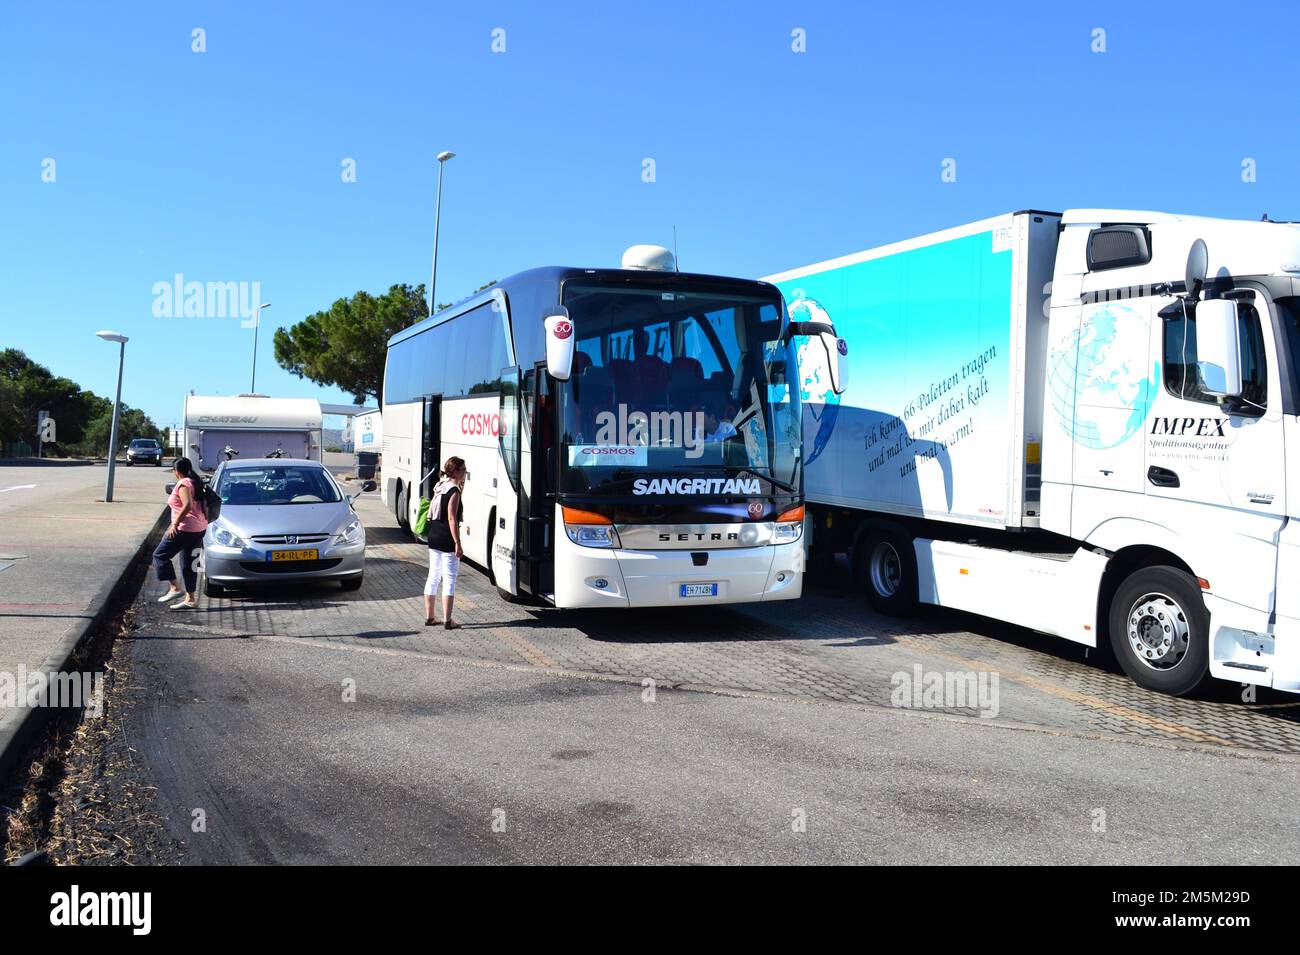 cosmos tours bus stopped at roadside rest stop on European tour. Stock Photo